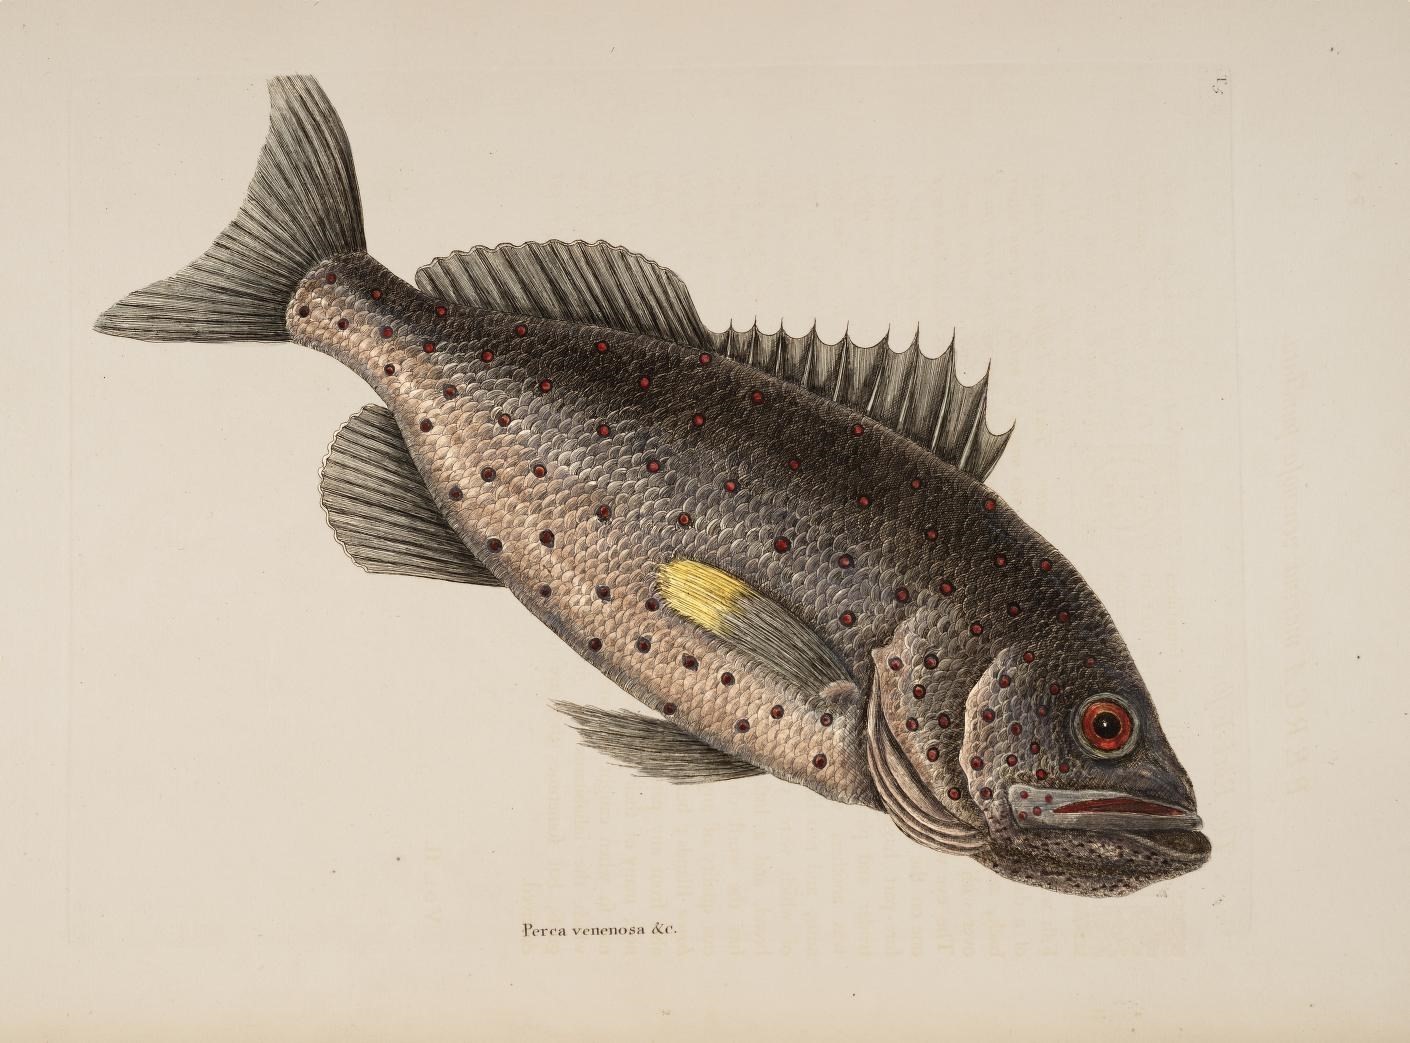 Image of Yellowfin Grouper